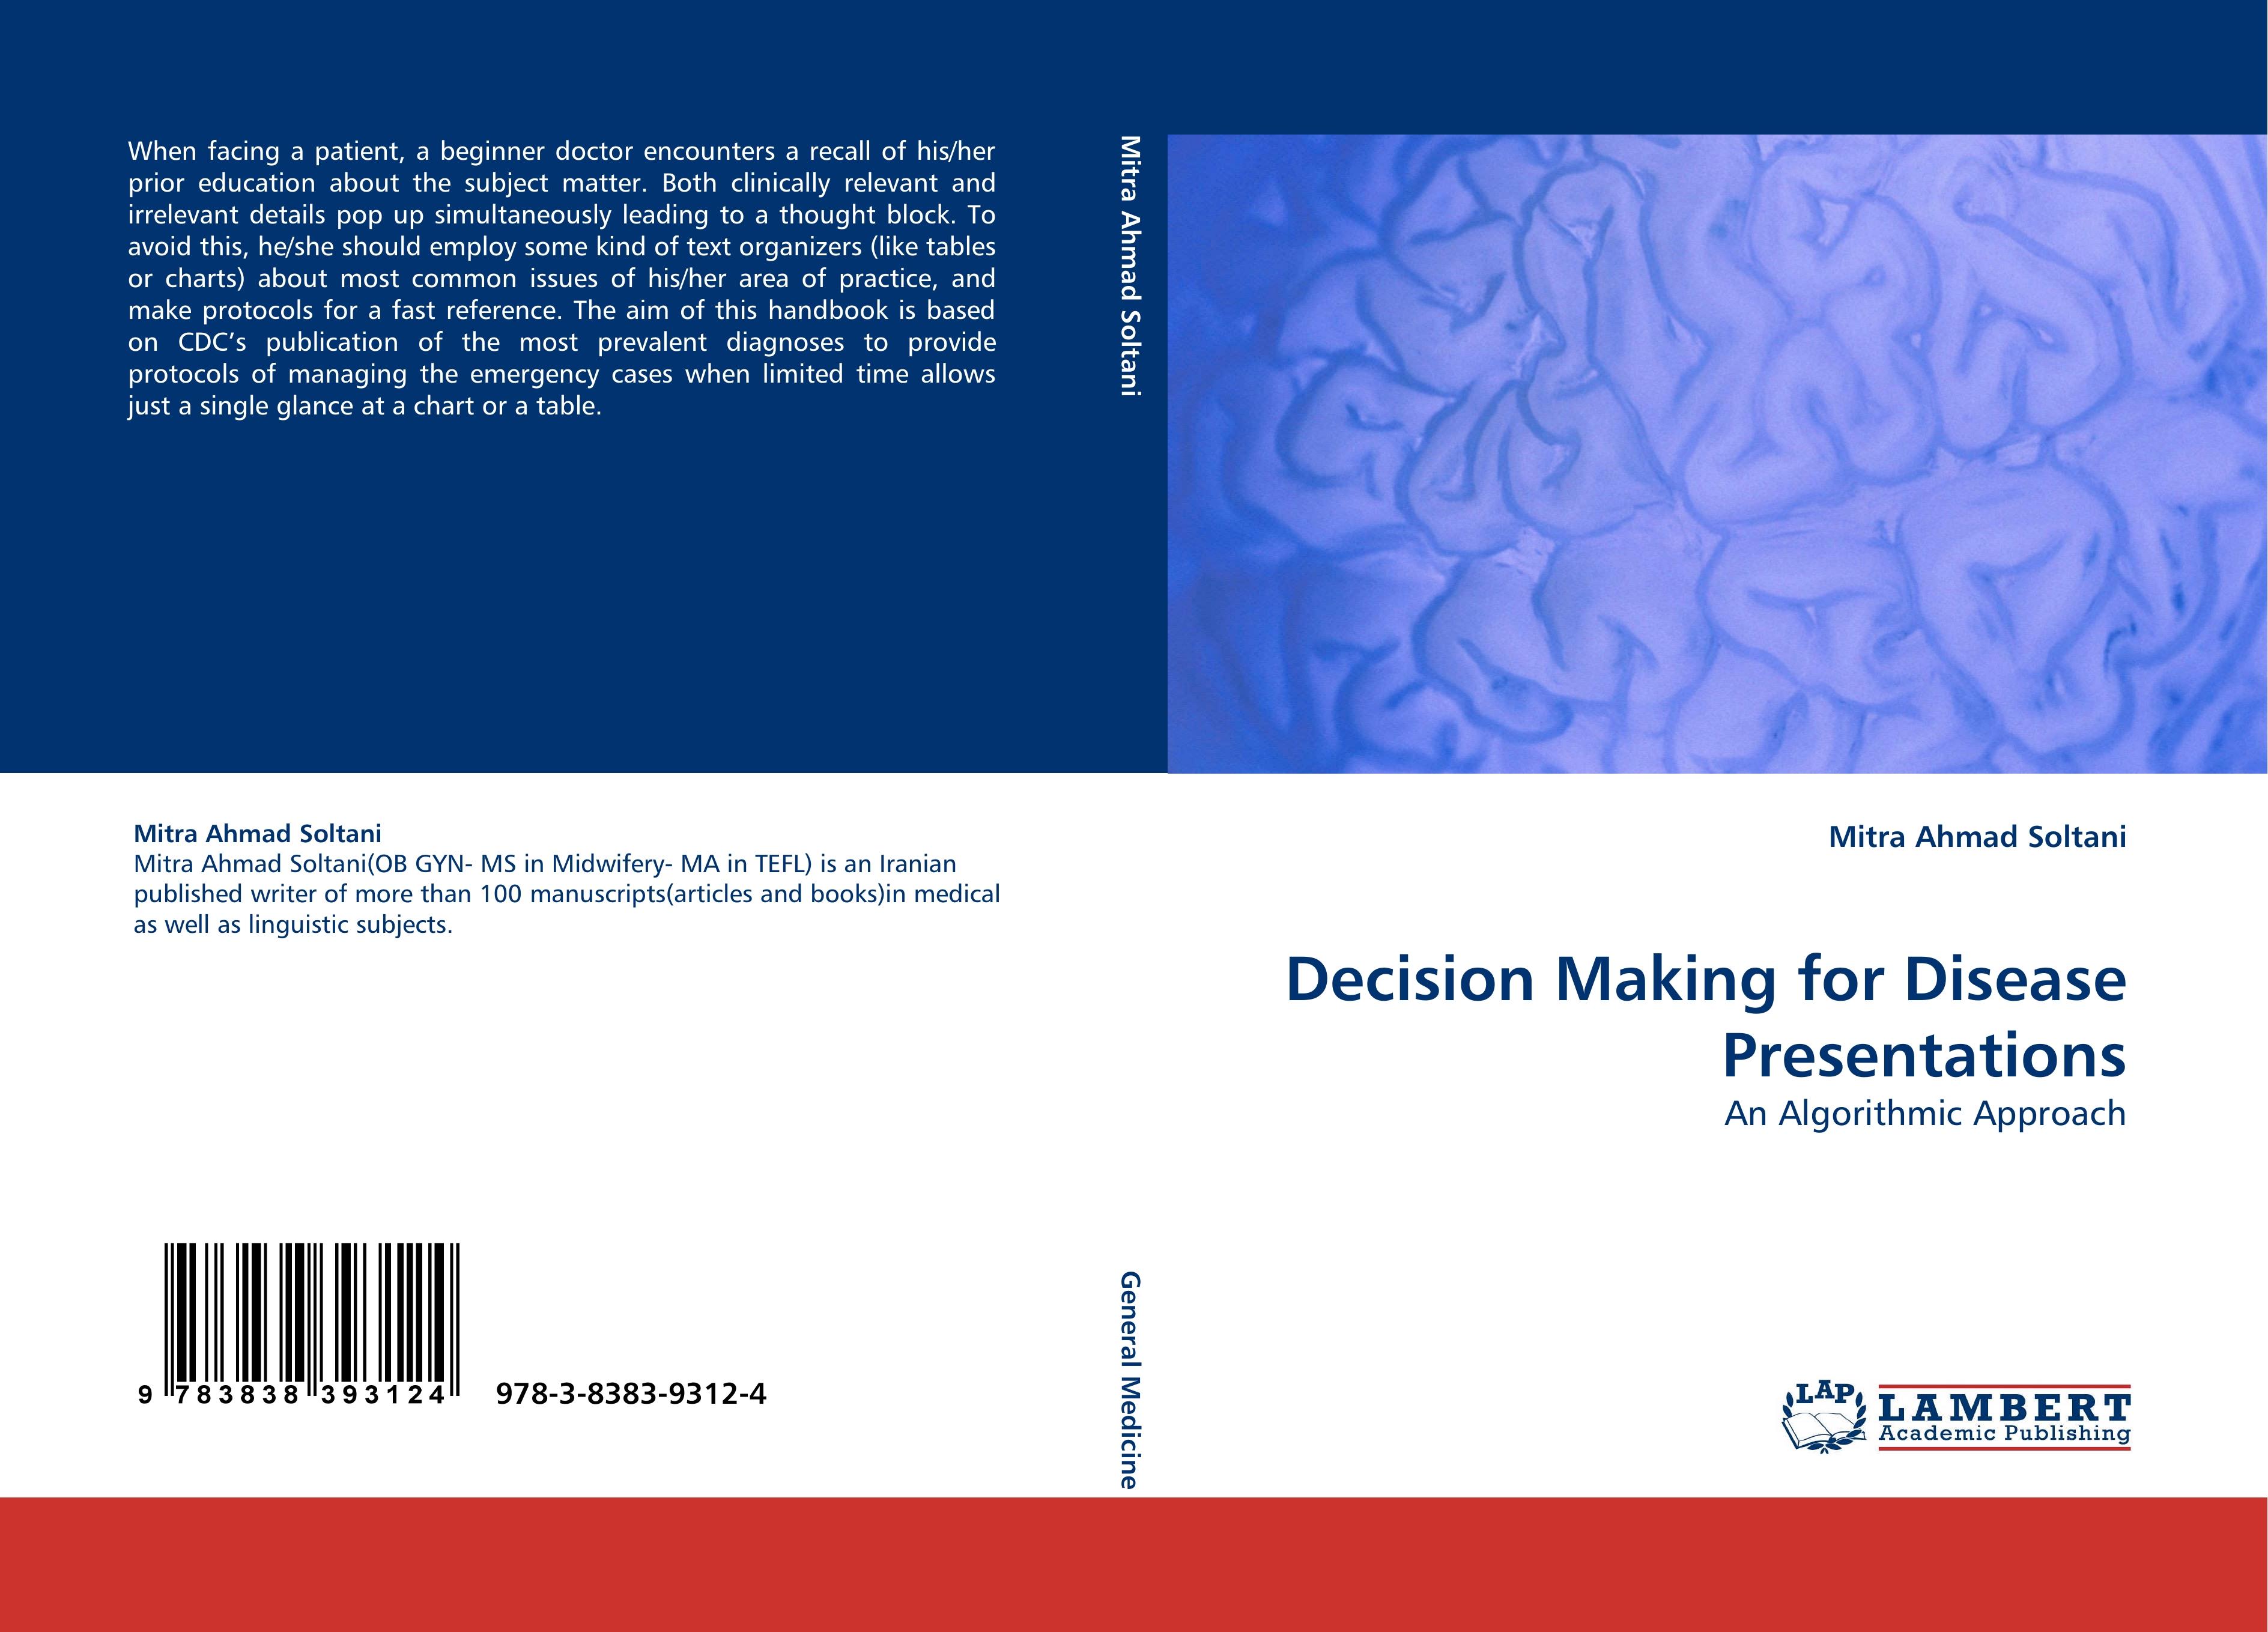 Decision Making for Disease Presentations - Mitra Ahmad Soltani